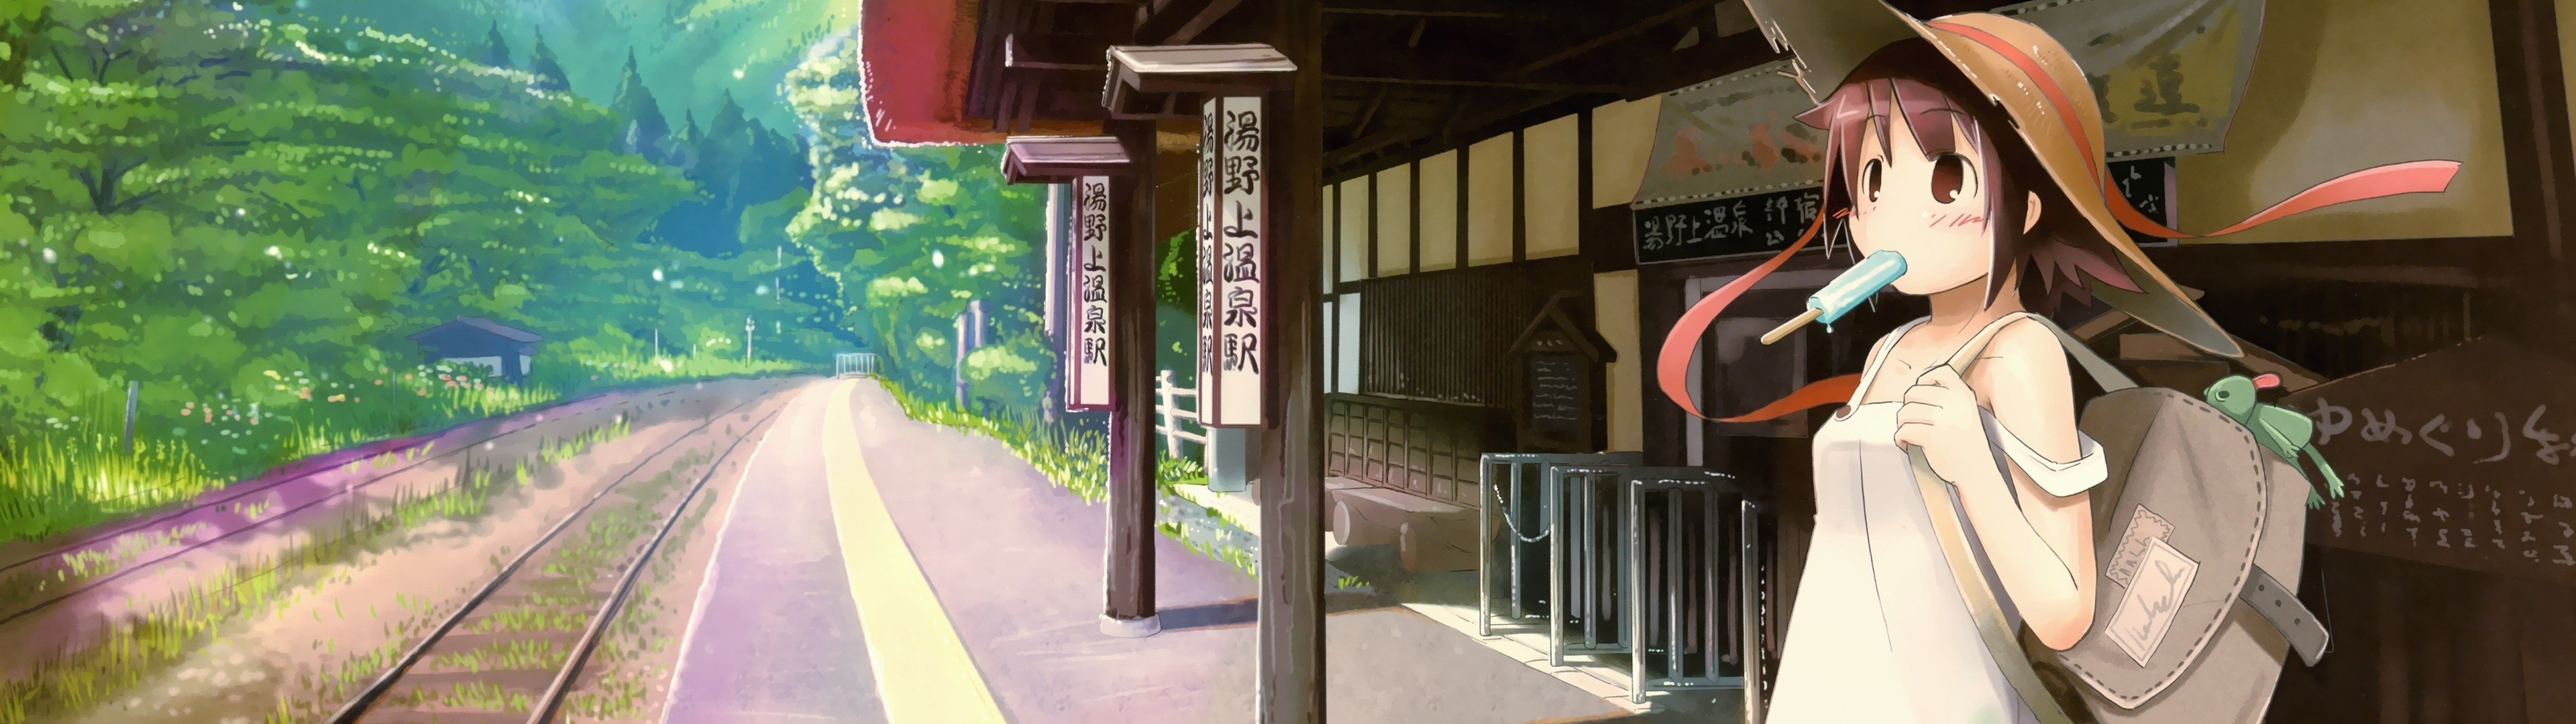 Soft Shading Train Station Sun Hats Anime Anime Girls 3840x1080